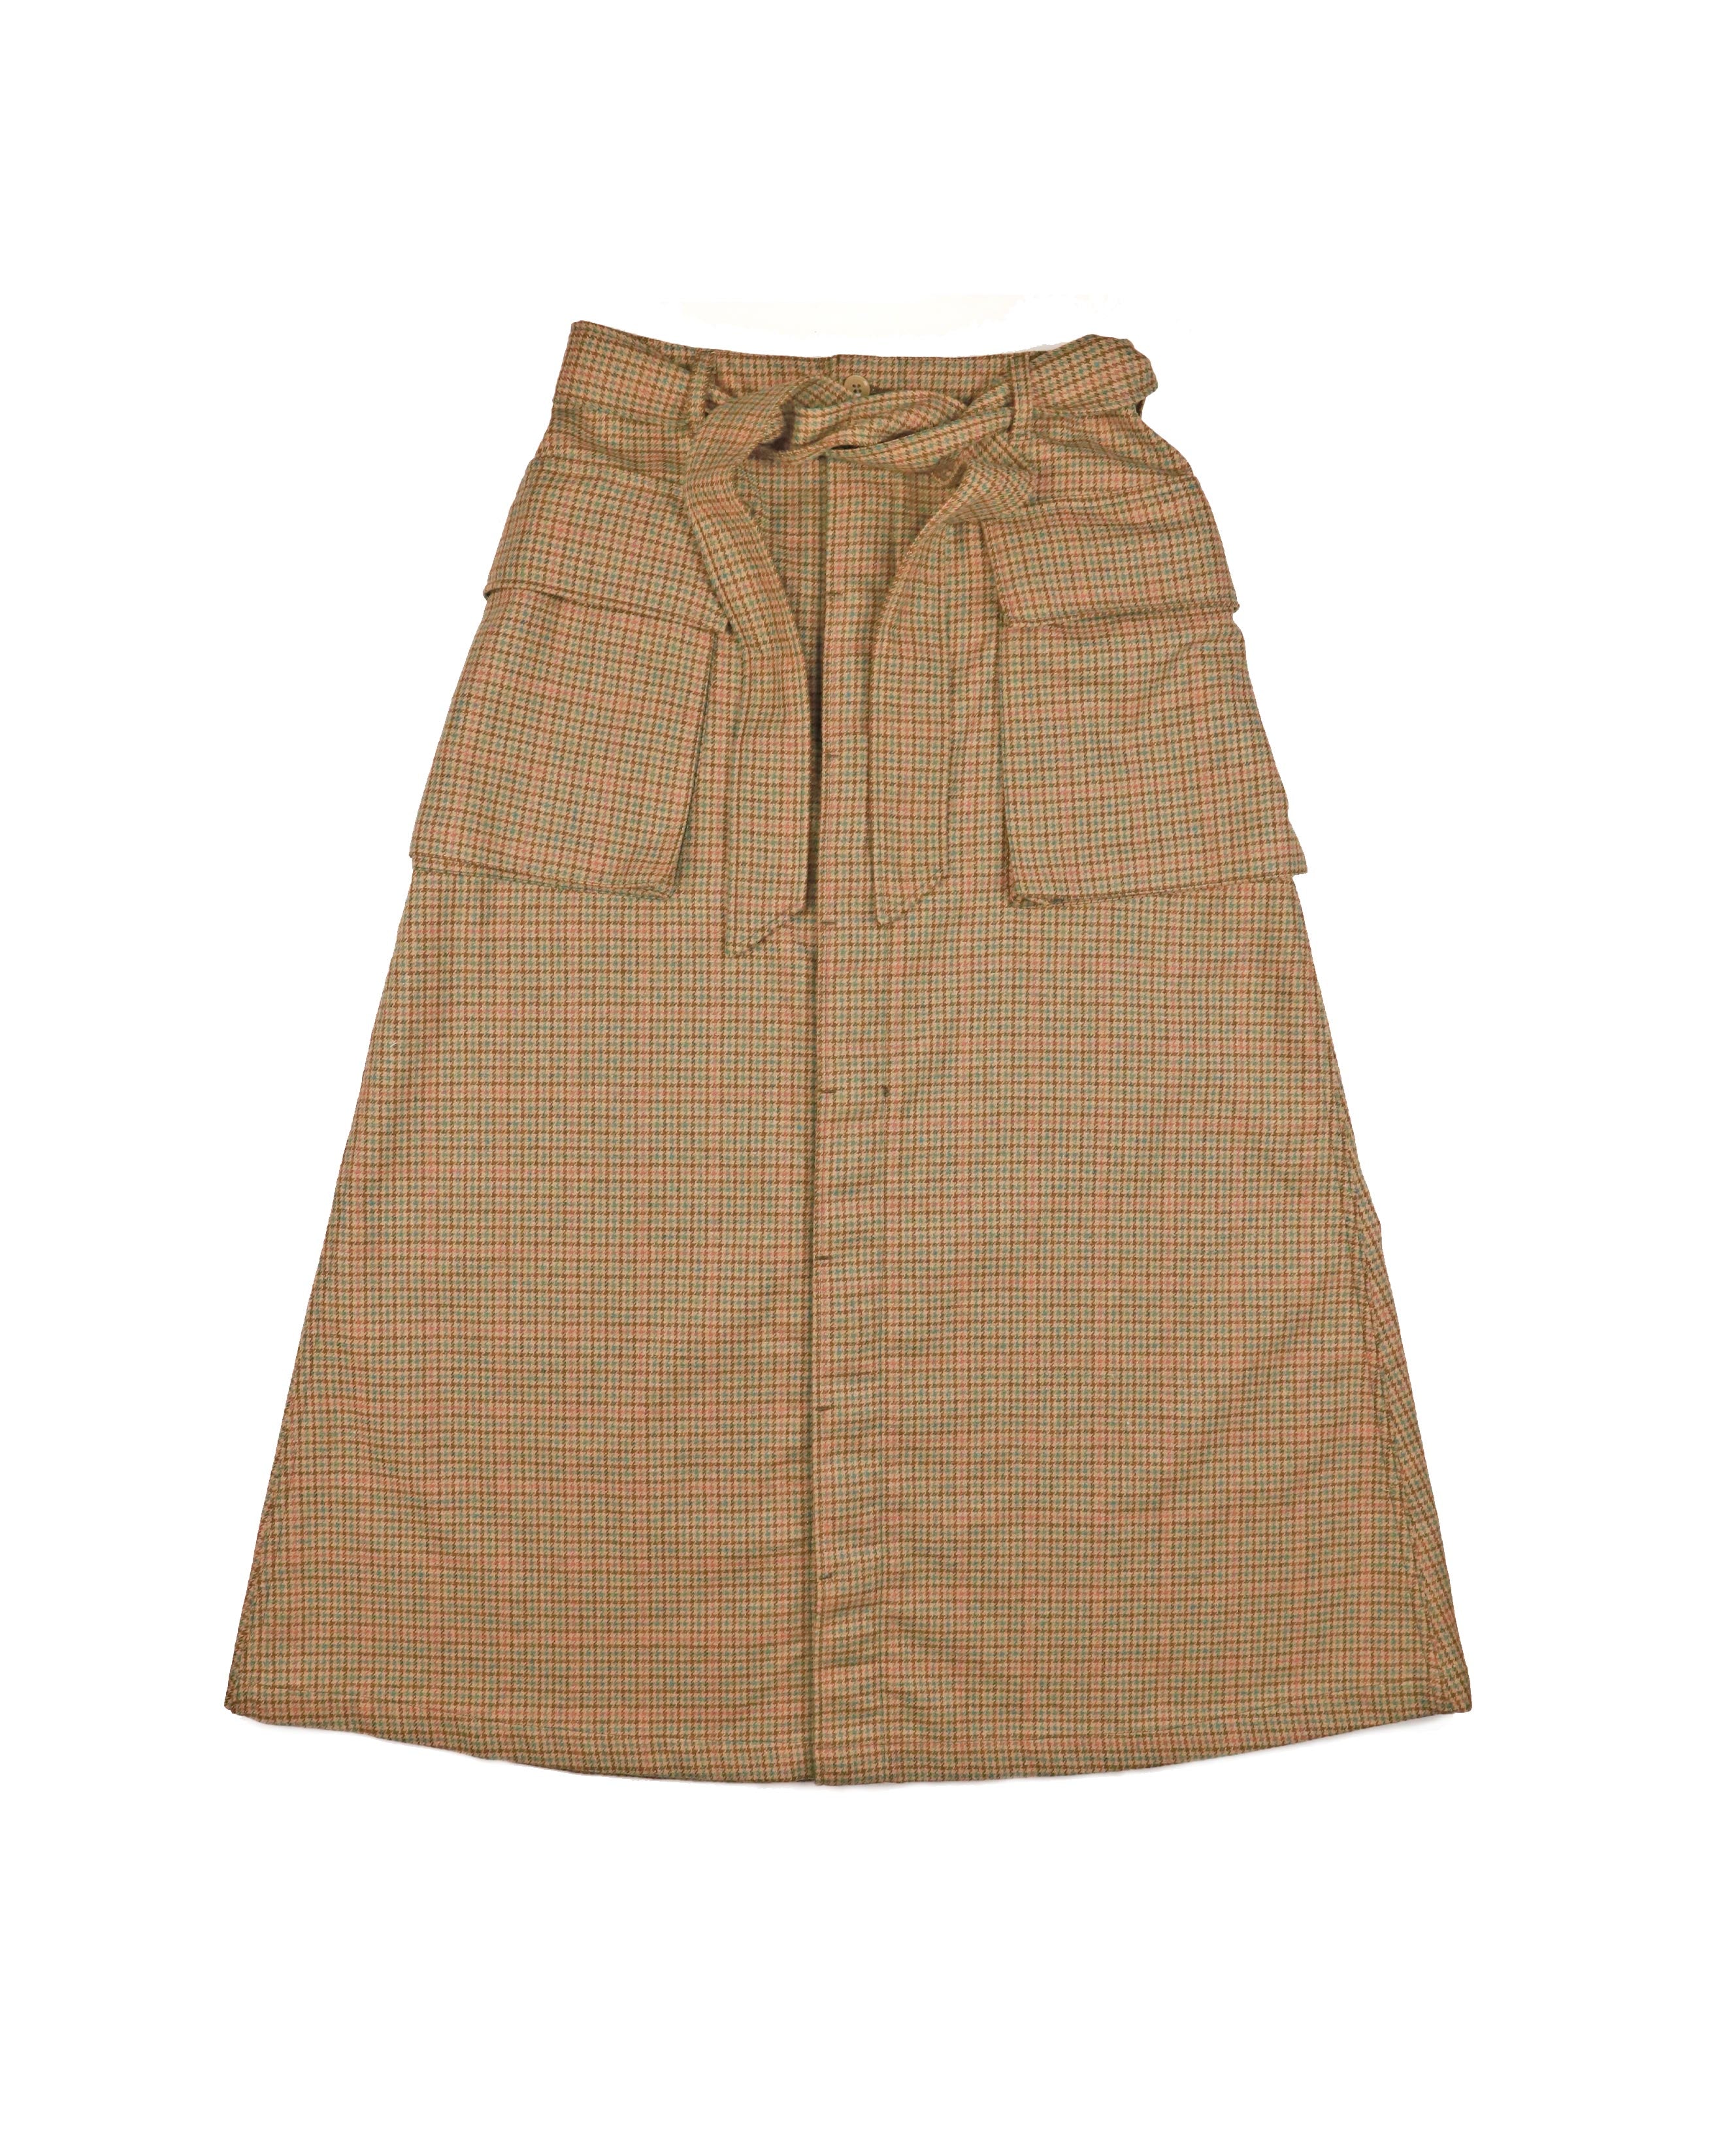 Engineered Garments Blank Label Monkey Skirt - Brown Guncheck